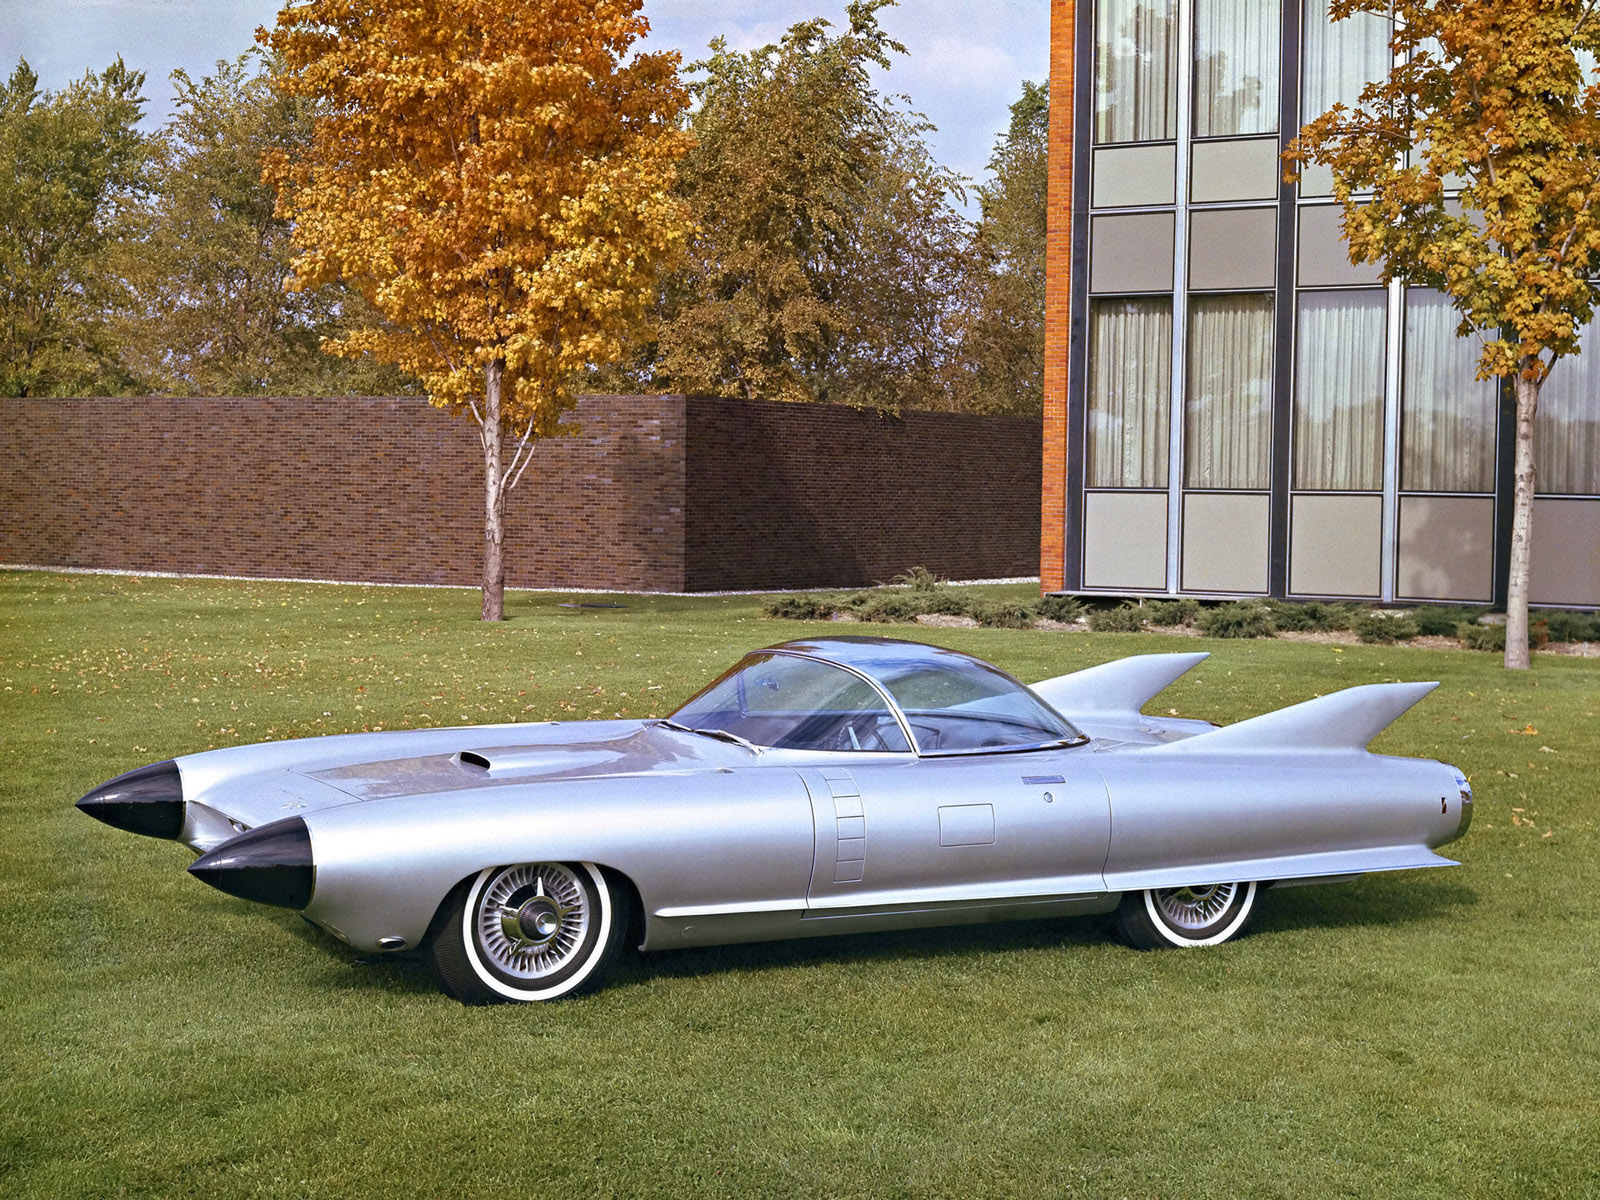 1959-Cadillac-Cyclone-Concept-lawn-1600x1200